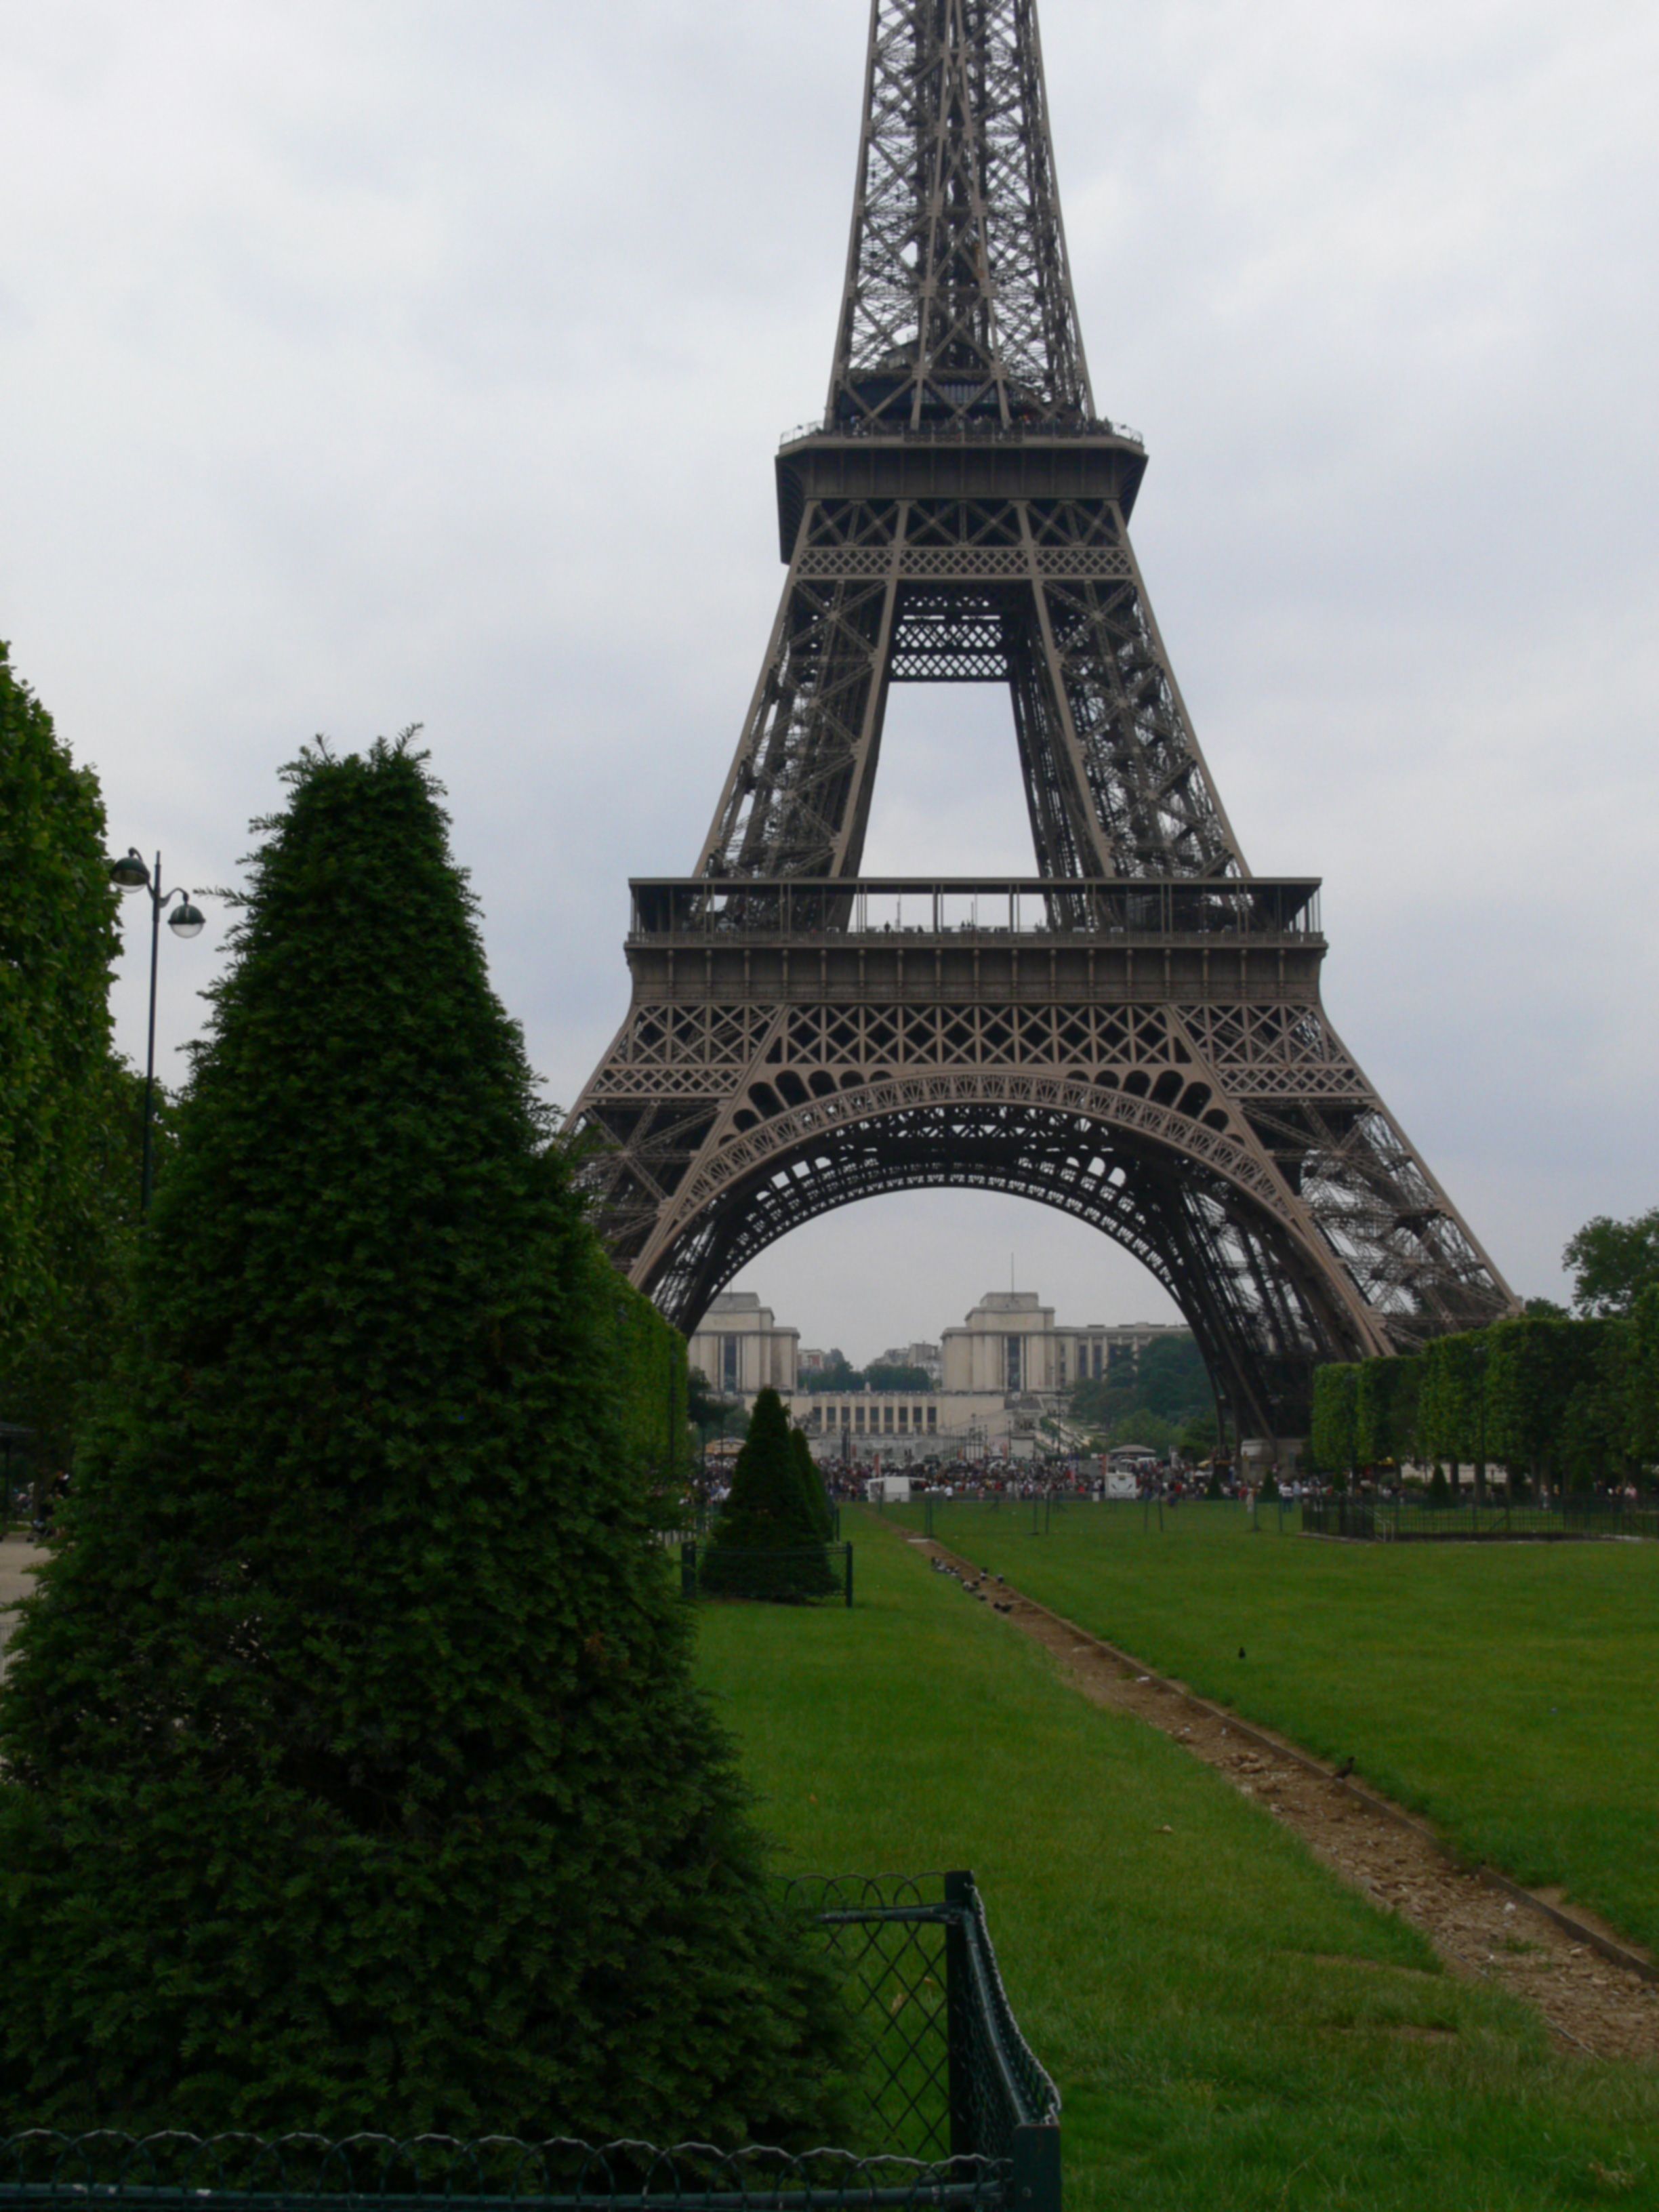 Foto borrada com torre Eiffel corrigida..